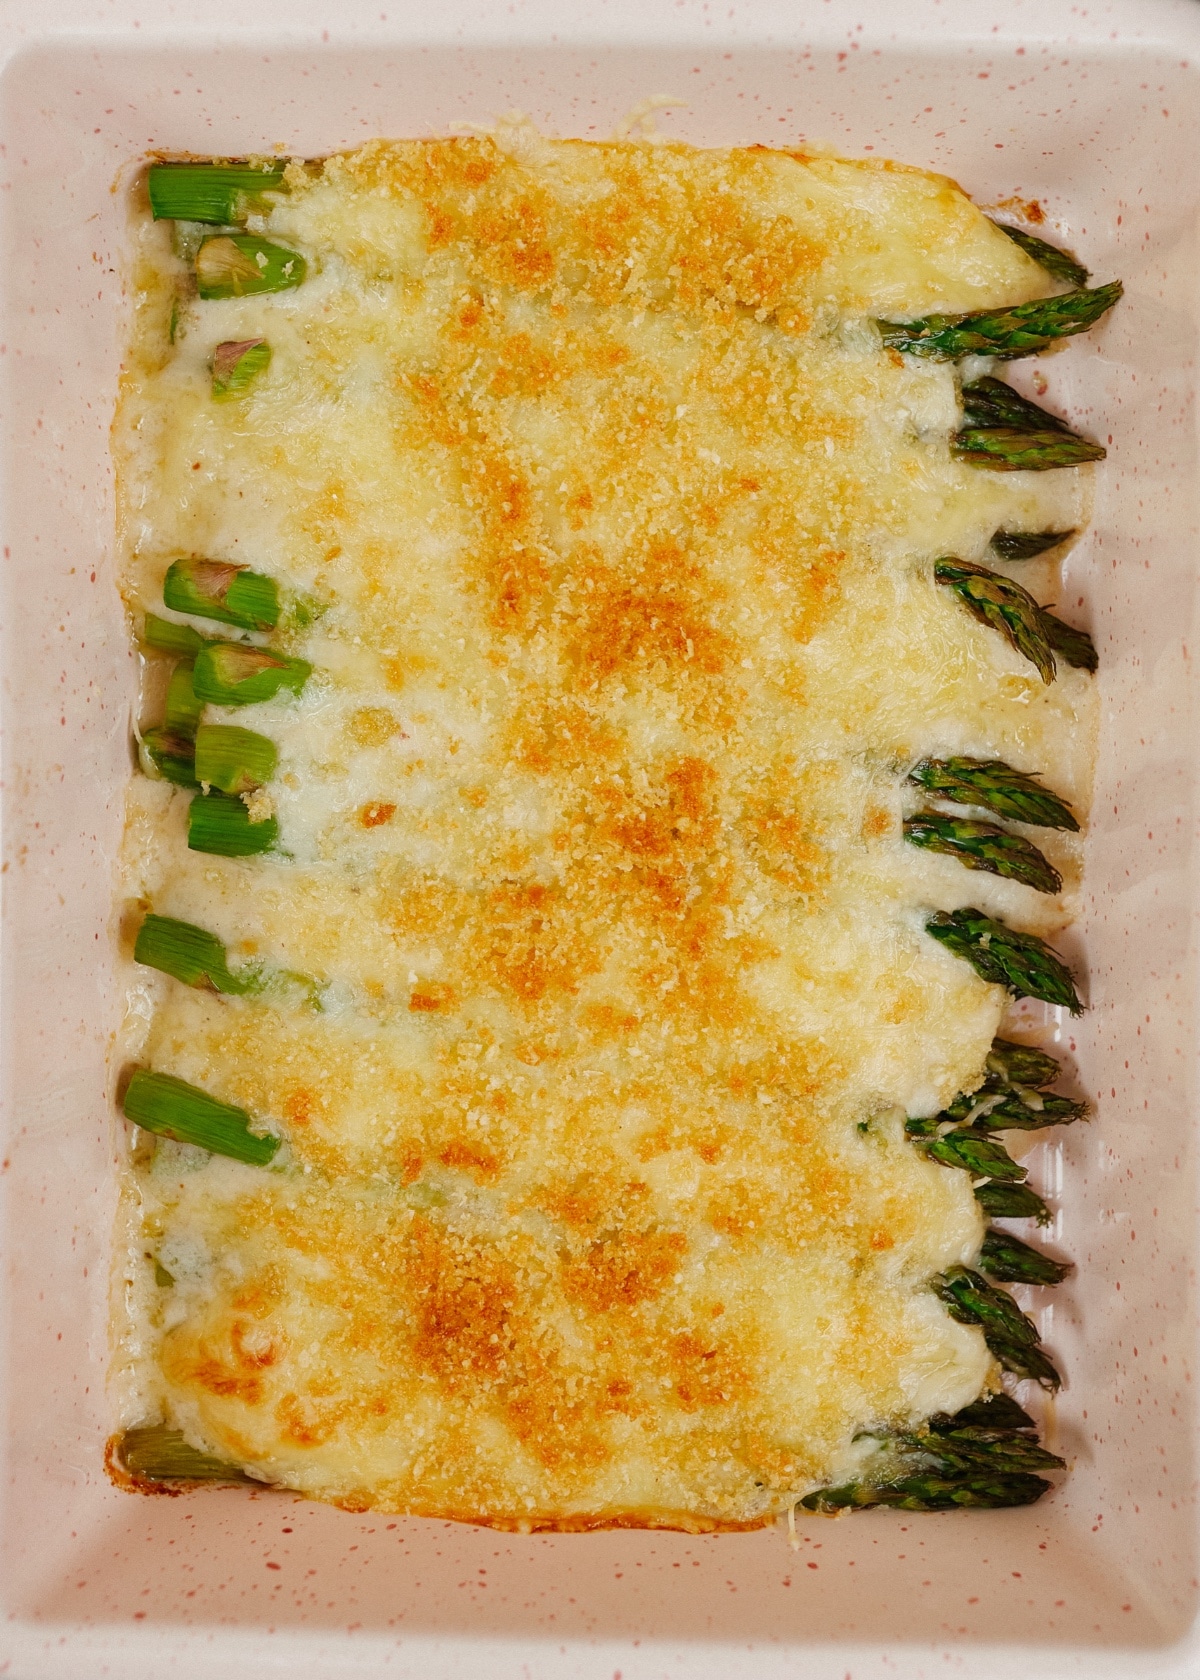 asparagus casserole in a baking dish